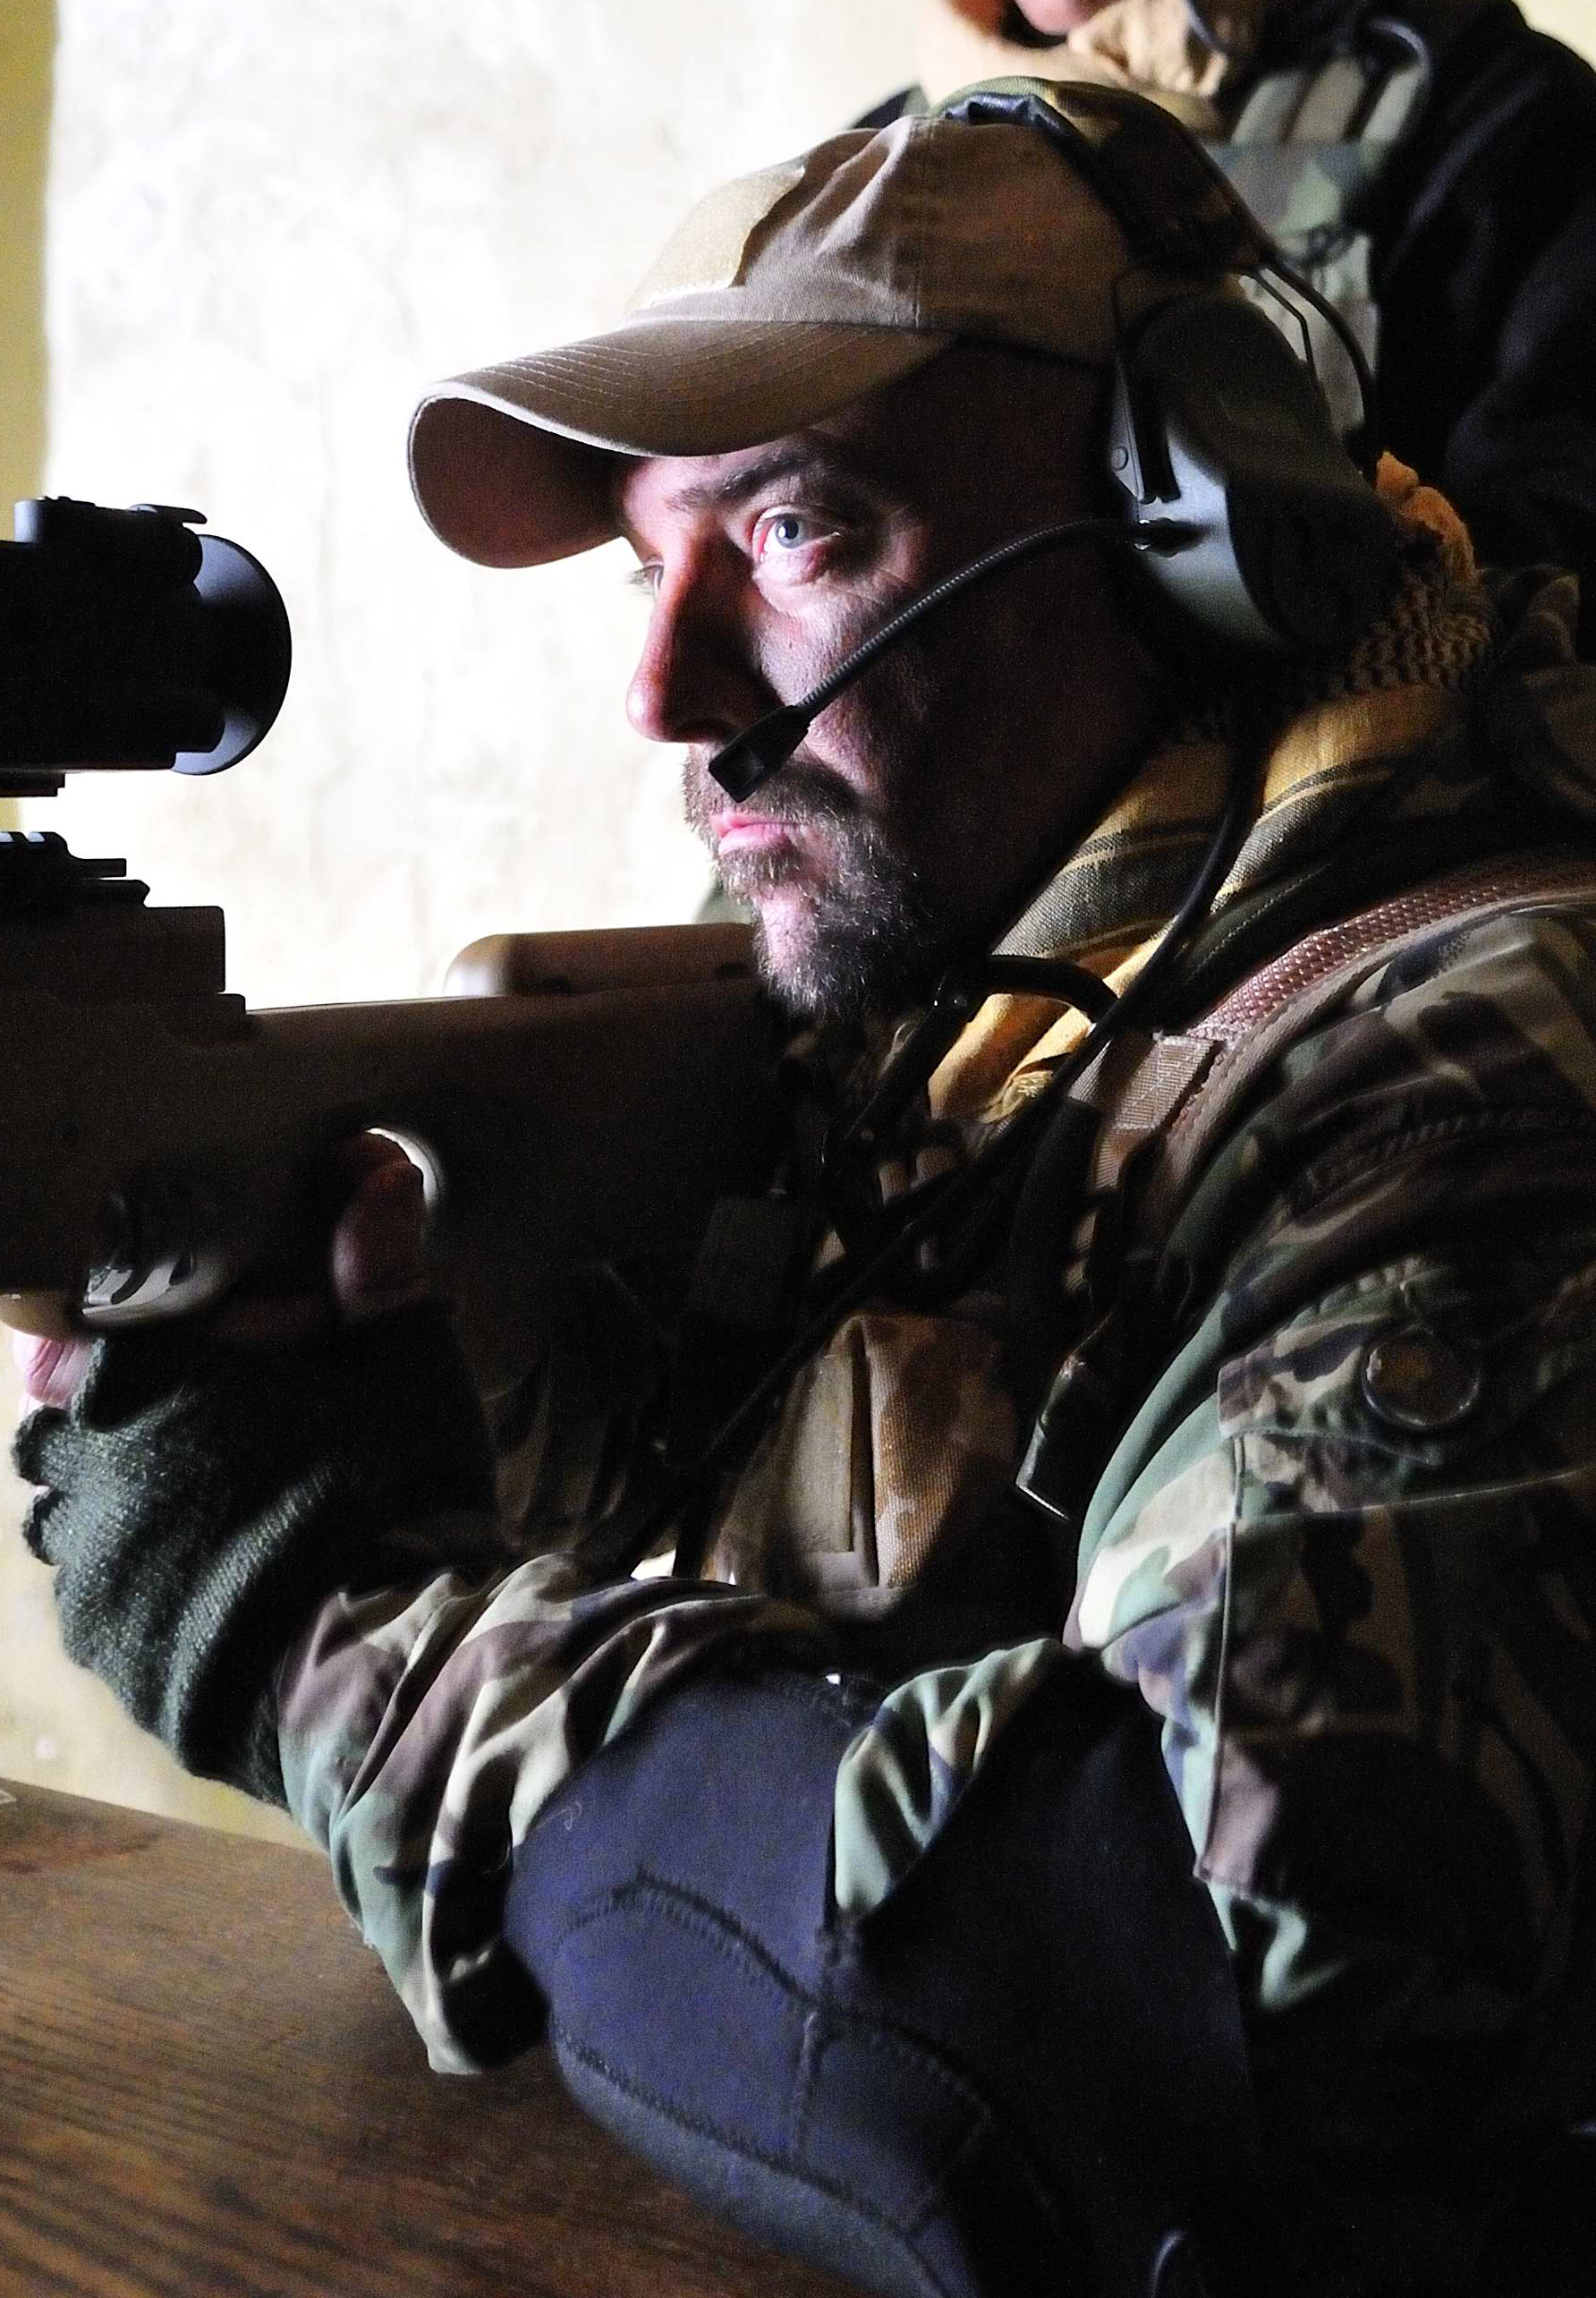 British SAS sniper for ITT night vision advertising campaign.